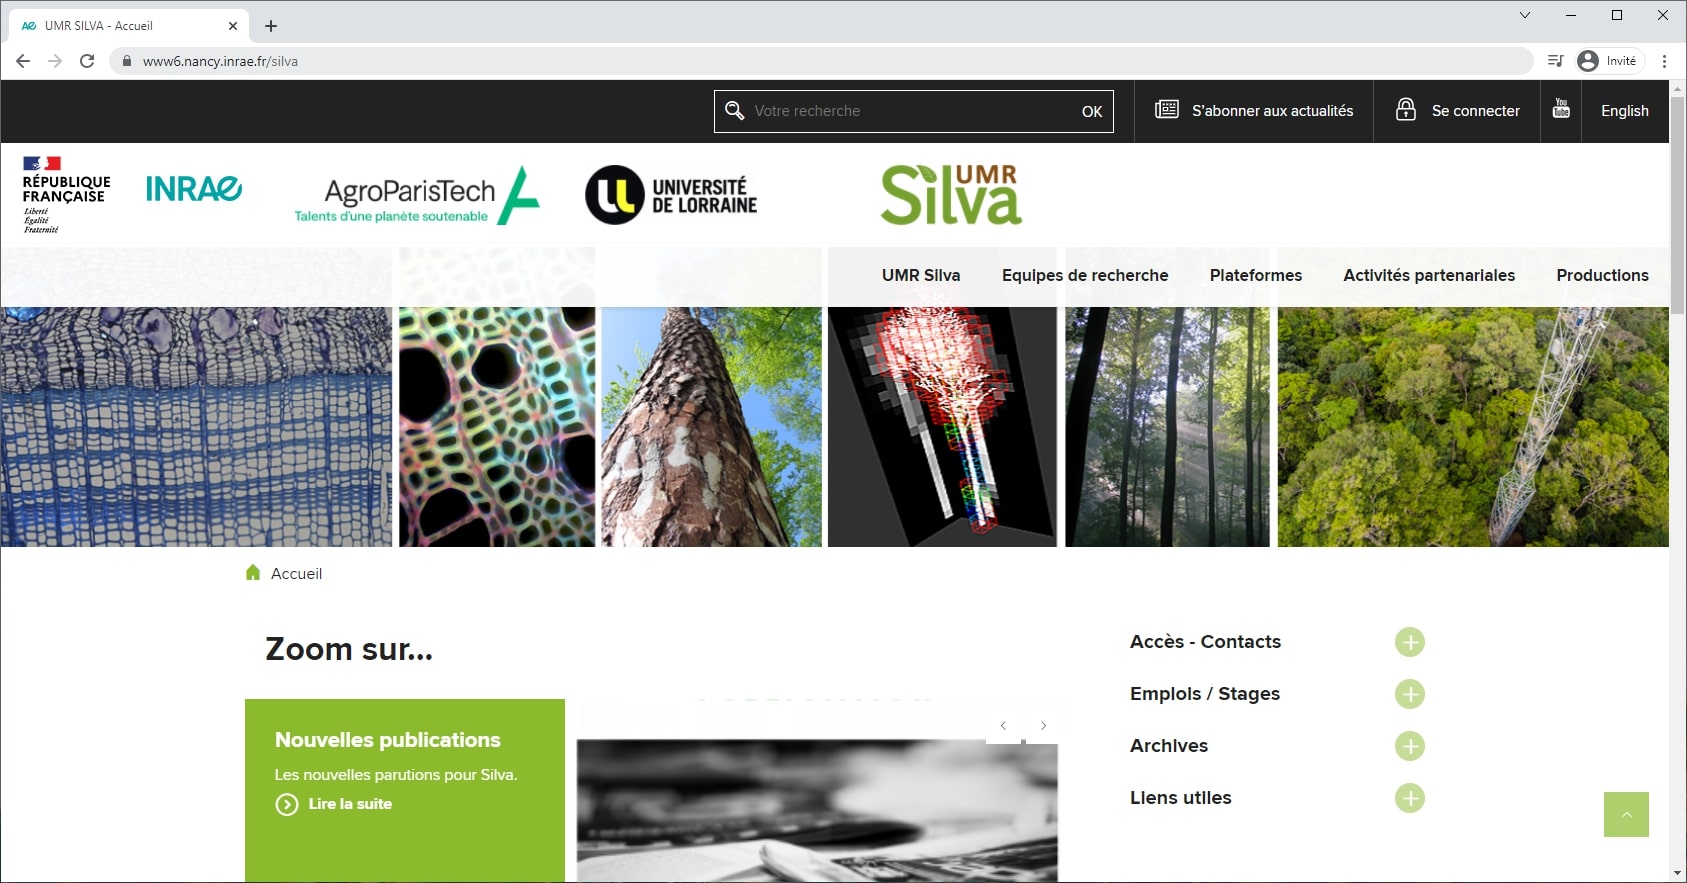 Interface web UMR Silva (INRAE - Université de Lorraine)